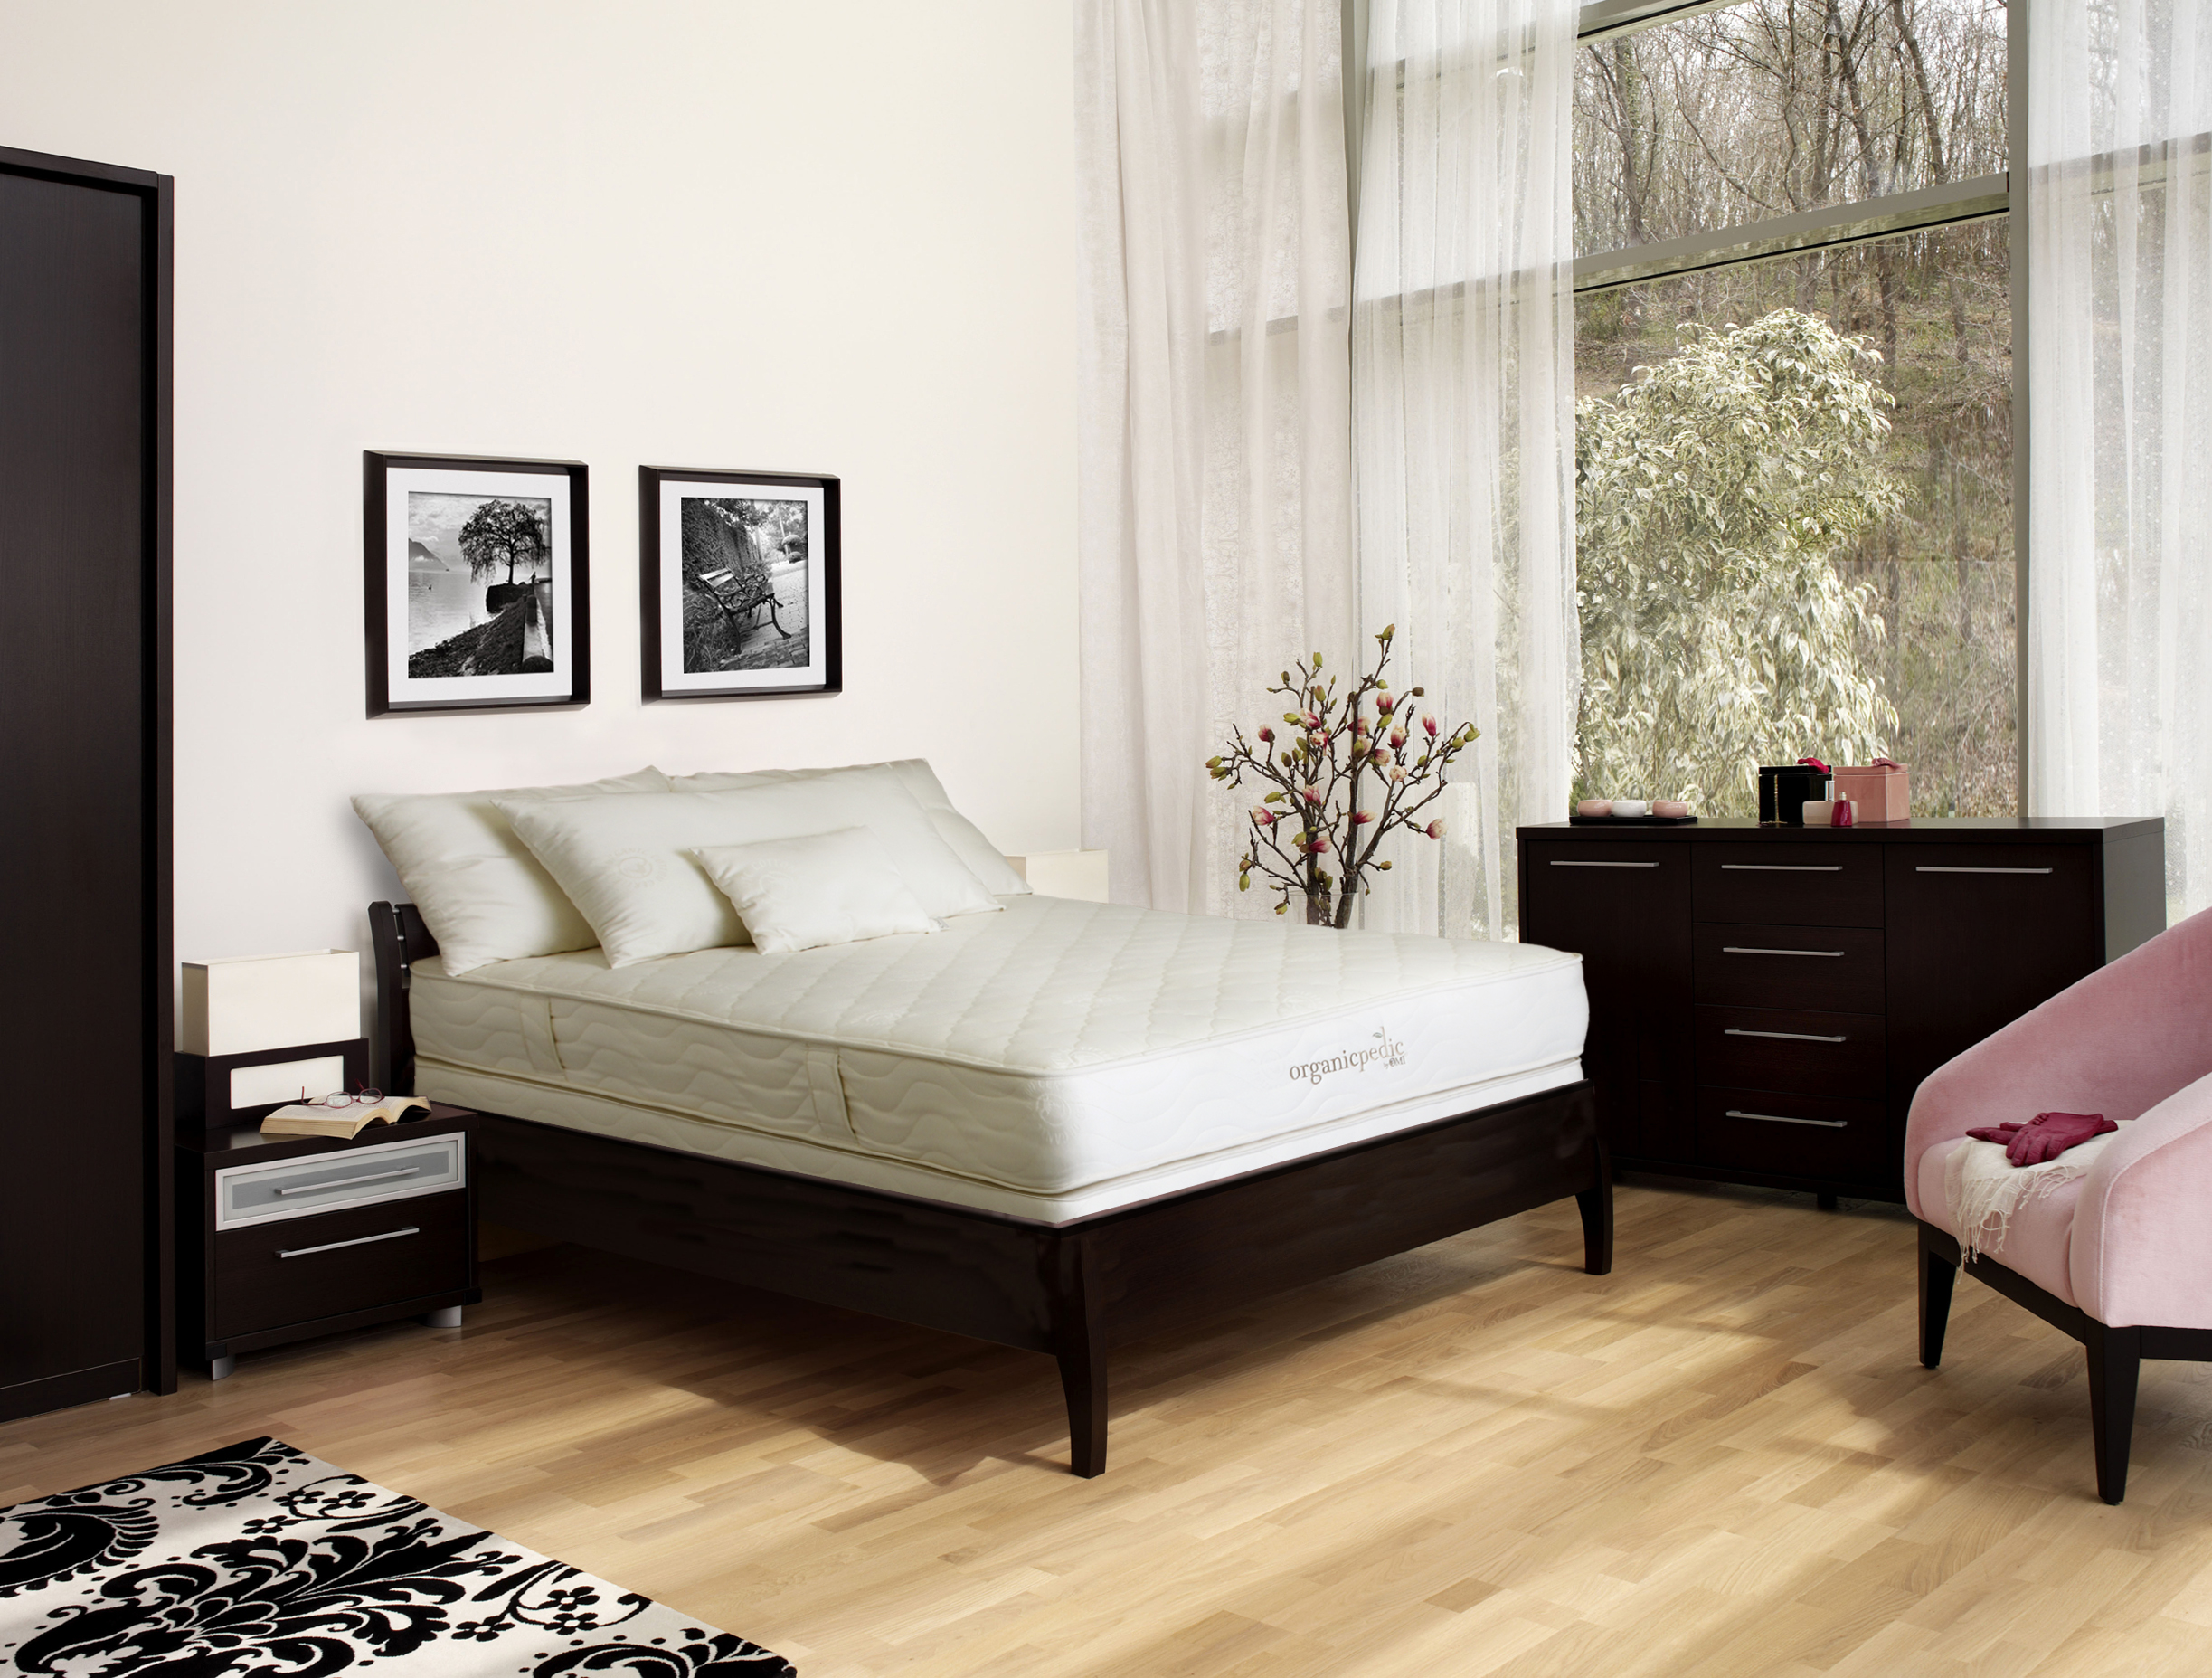 organic mattress adjustable beds